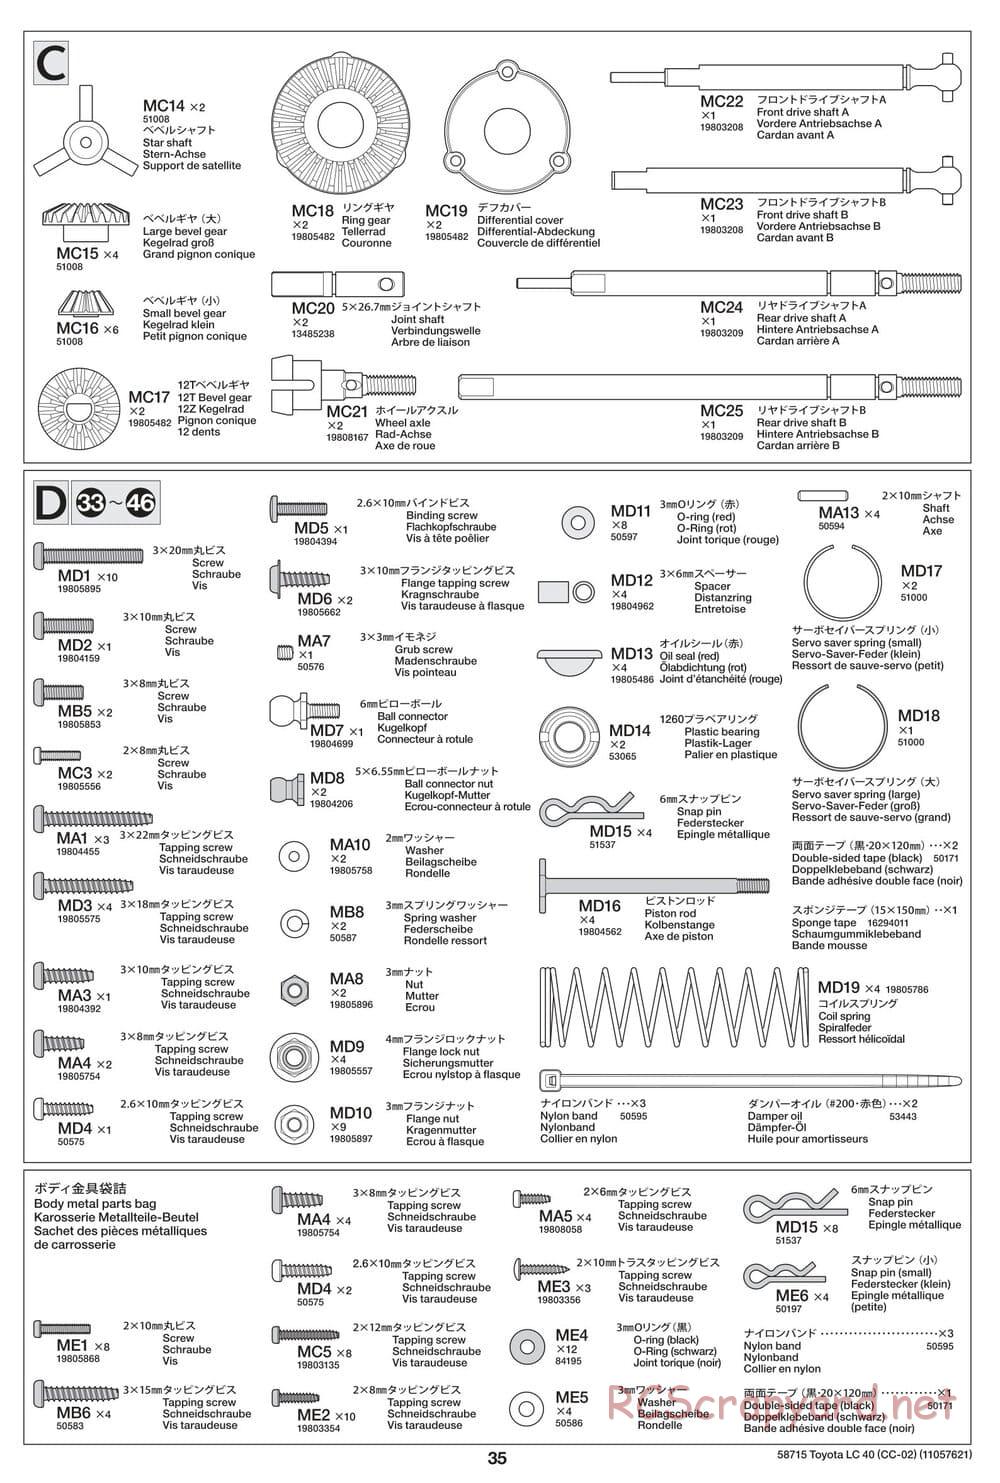 Tamiya - Toyota Land Cruiser 40 - CC-02 Chassis - Manual - Page 35